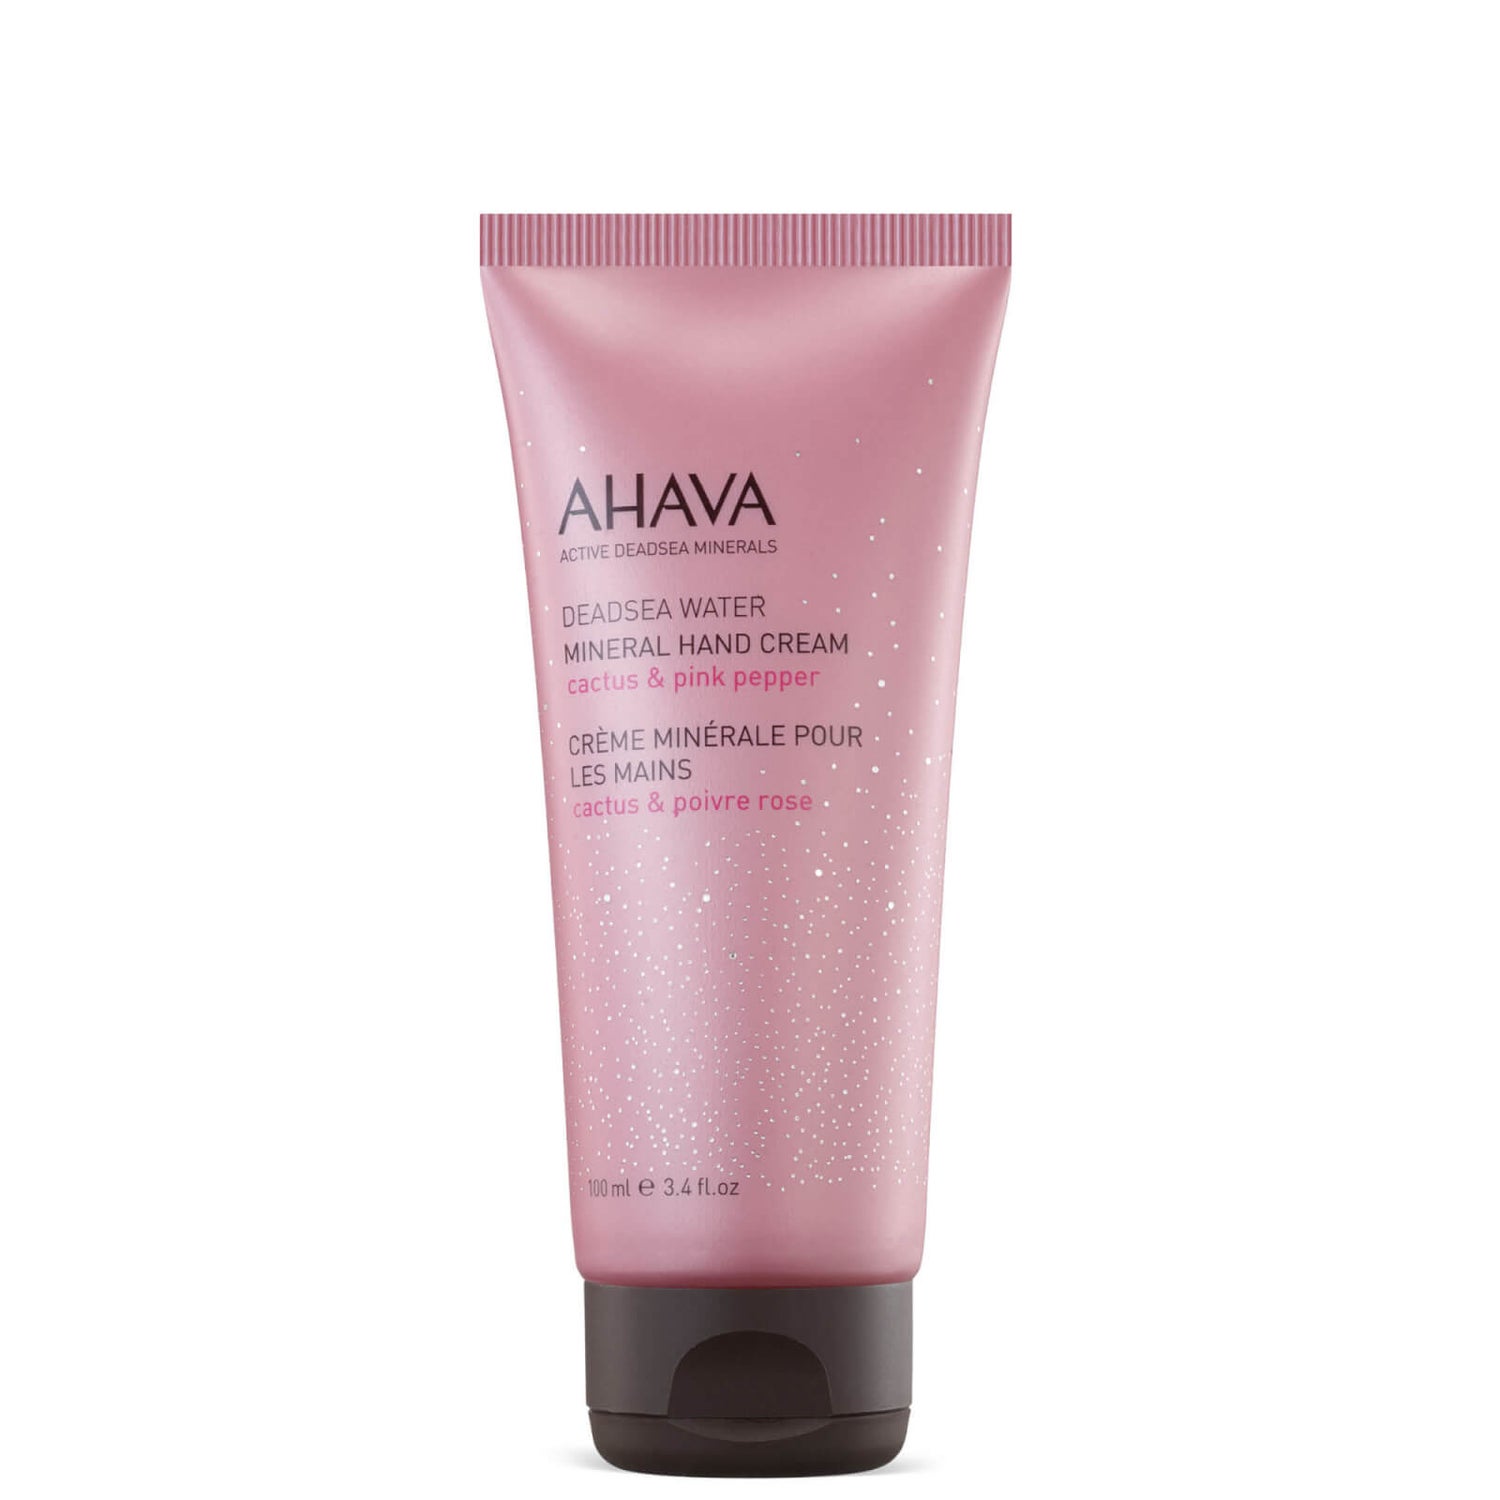 AHAVA 矿物质护手霜 - 仙人掌和粉红胡椒 100ml